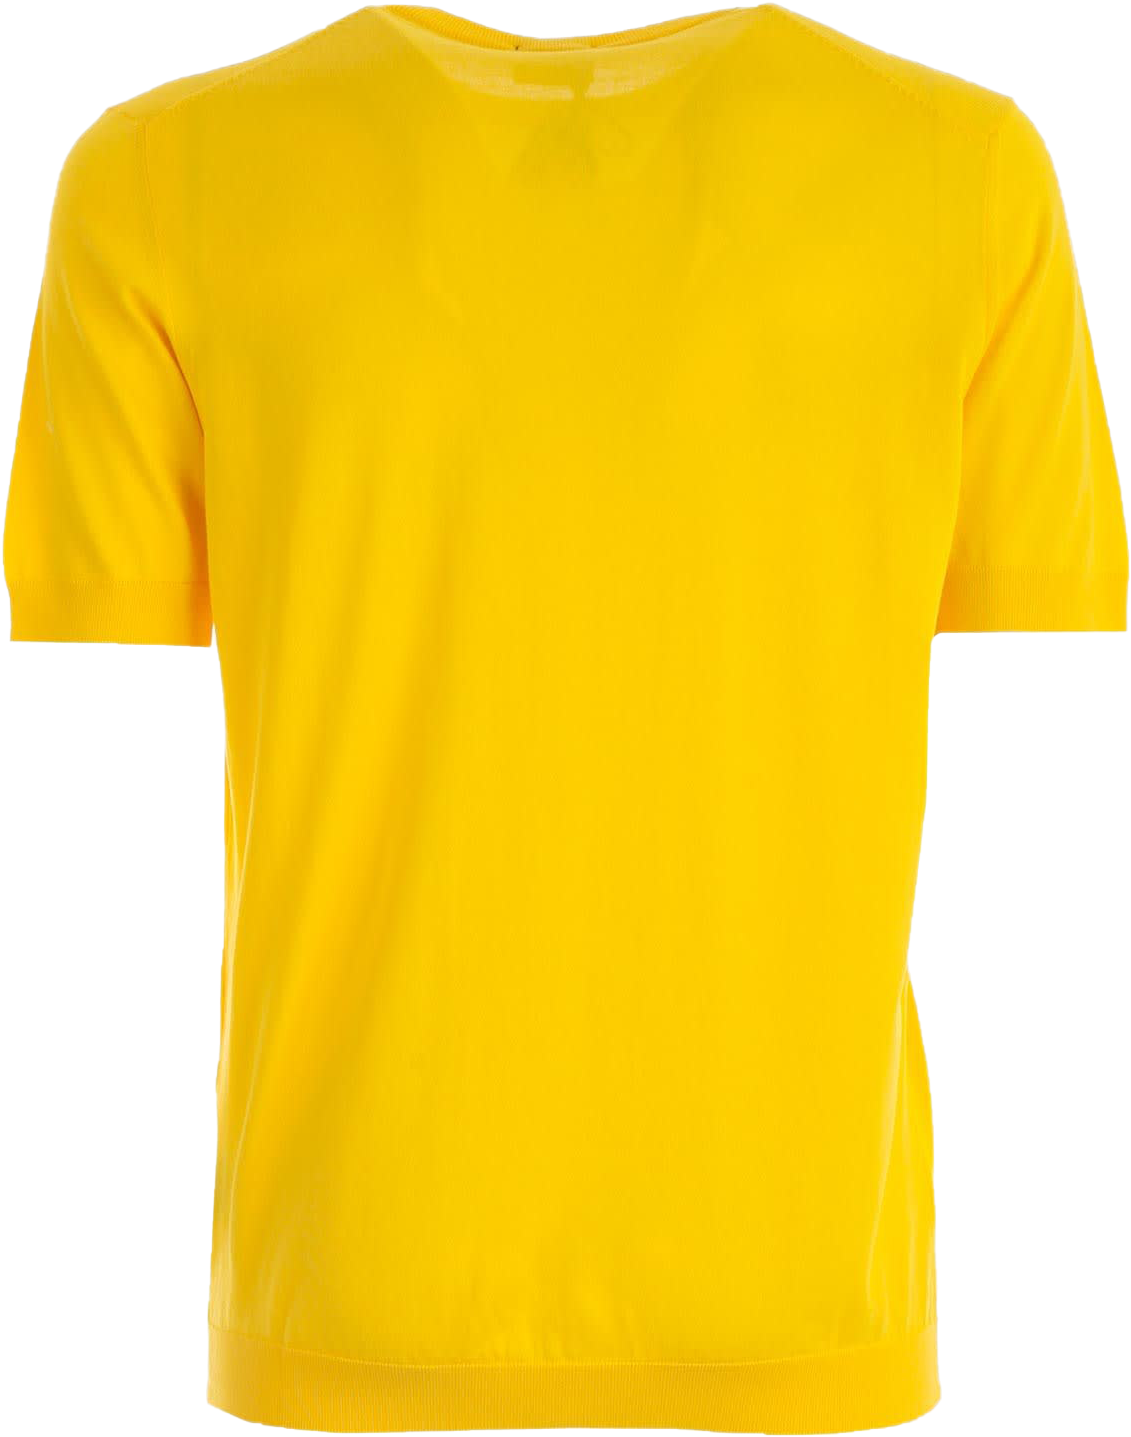 Plain Yellow T Shirt Product Photo PNG image